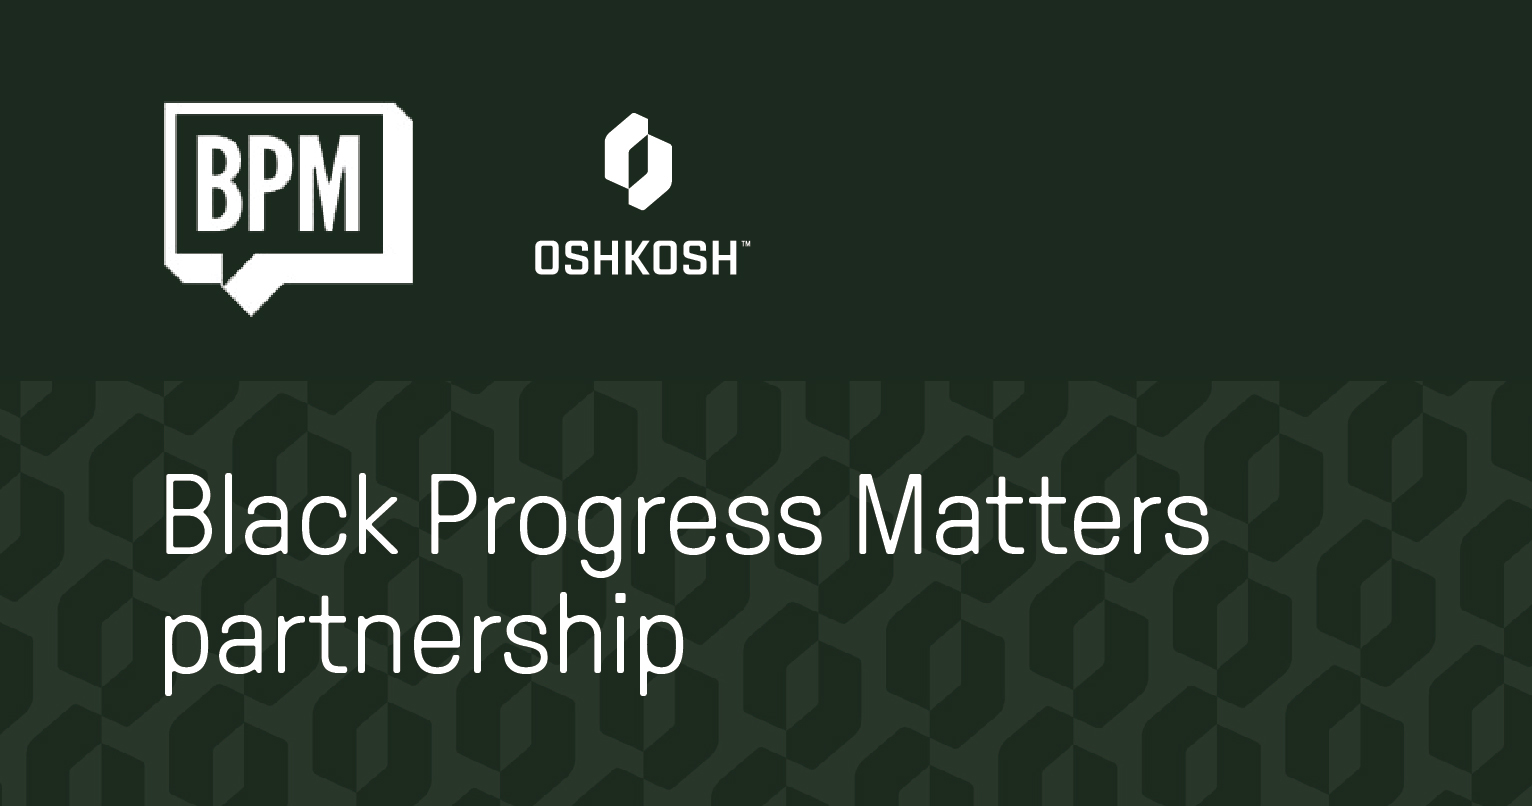 Black Partner Matters partnership graphic with green background, Oshkosh Corporation logo and BPM logo